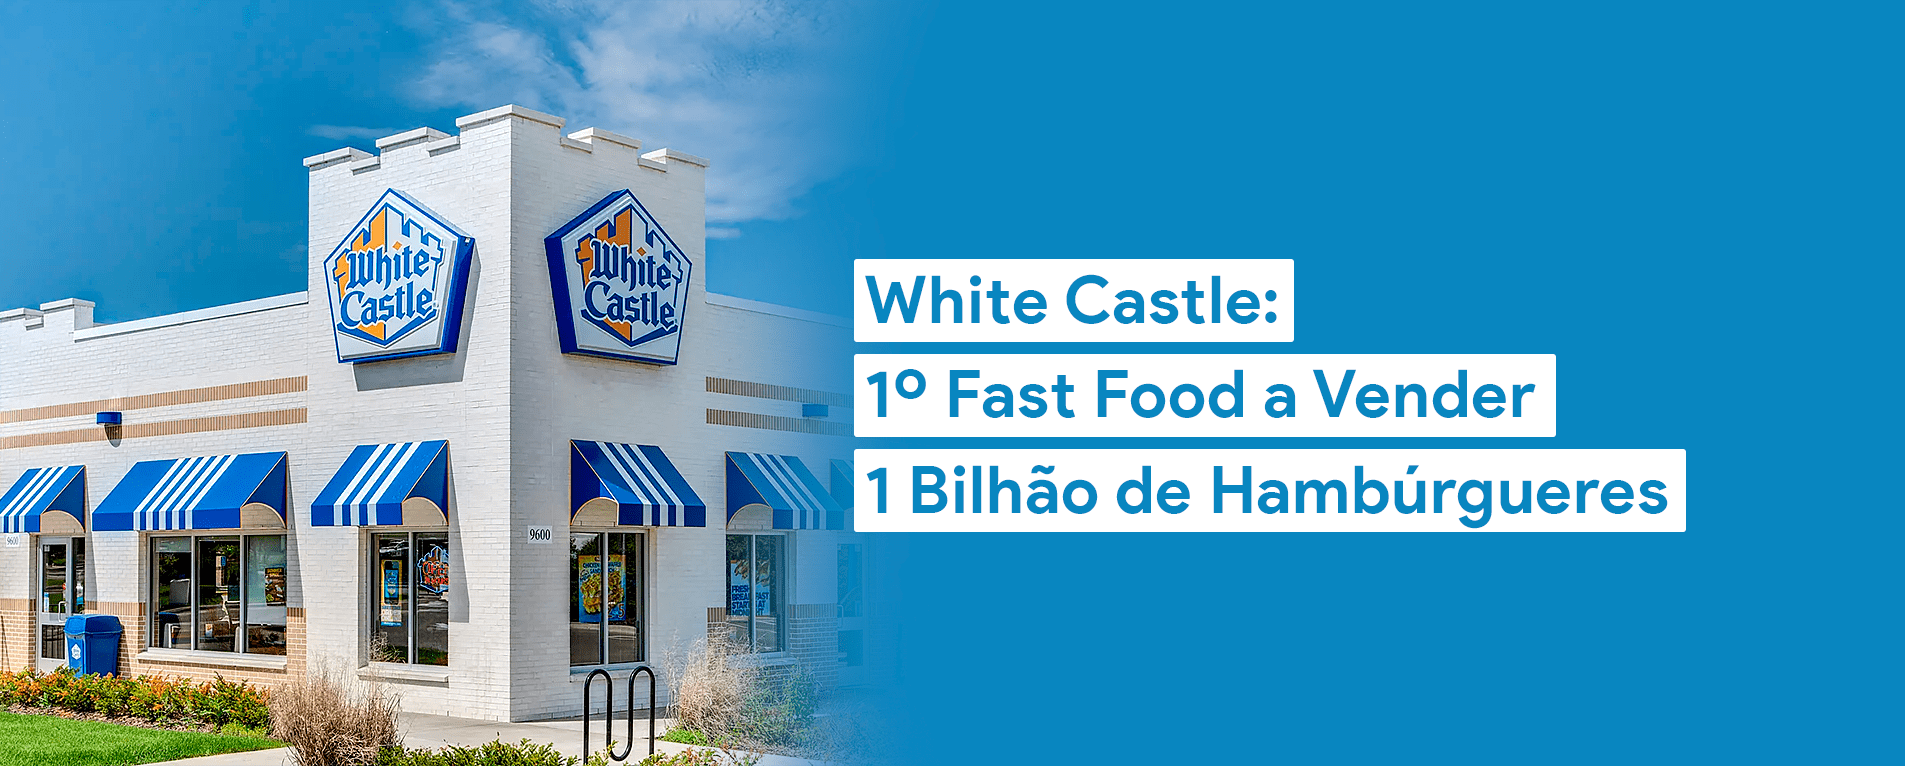 White Castle: 1º Fast Food a Vender 1 Bilhão de Hambúrgueres